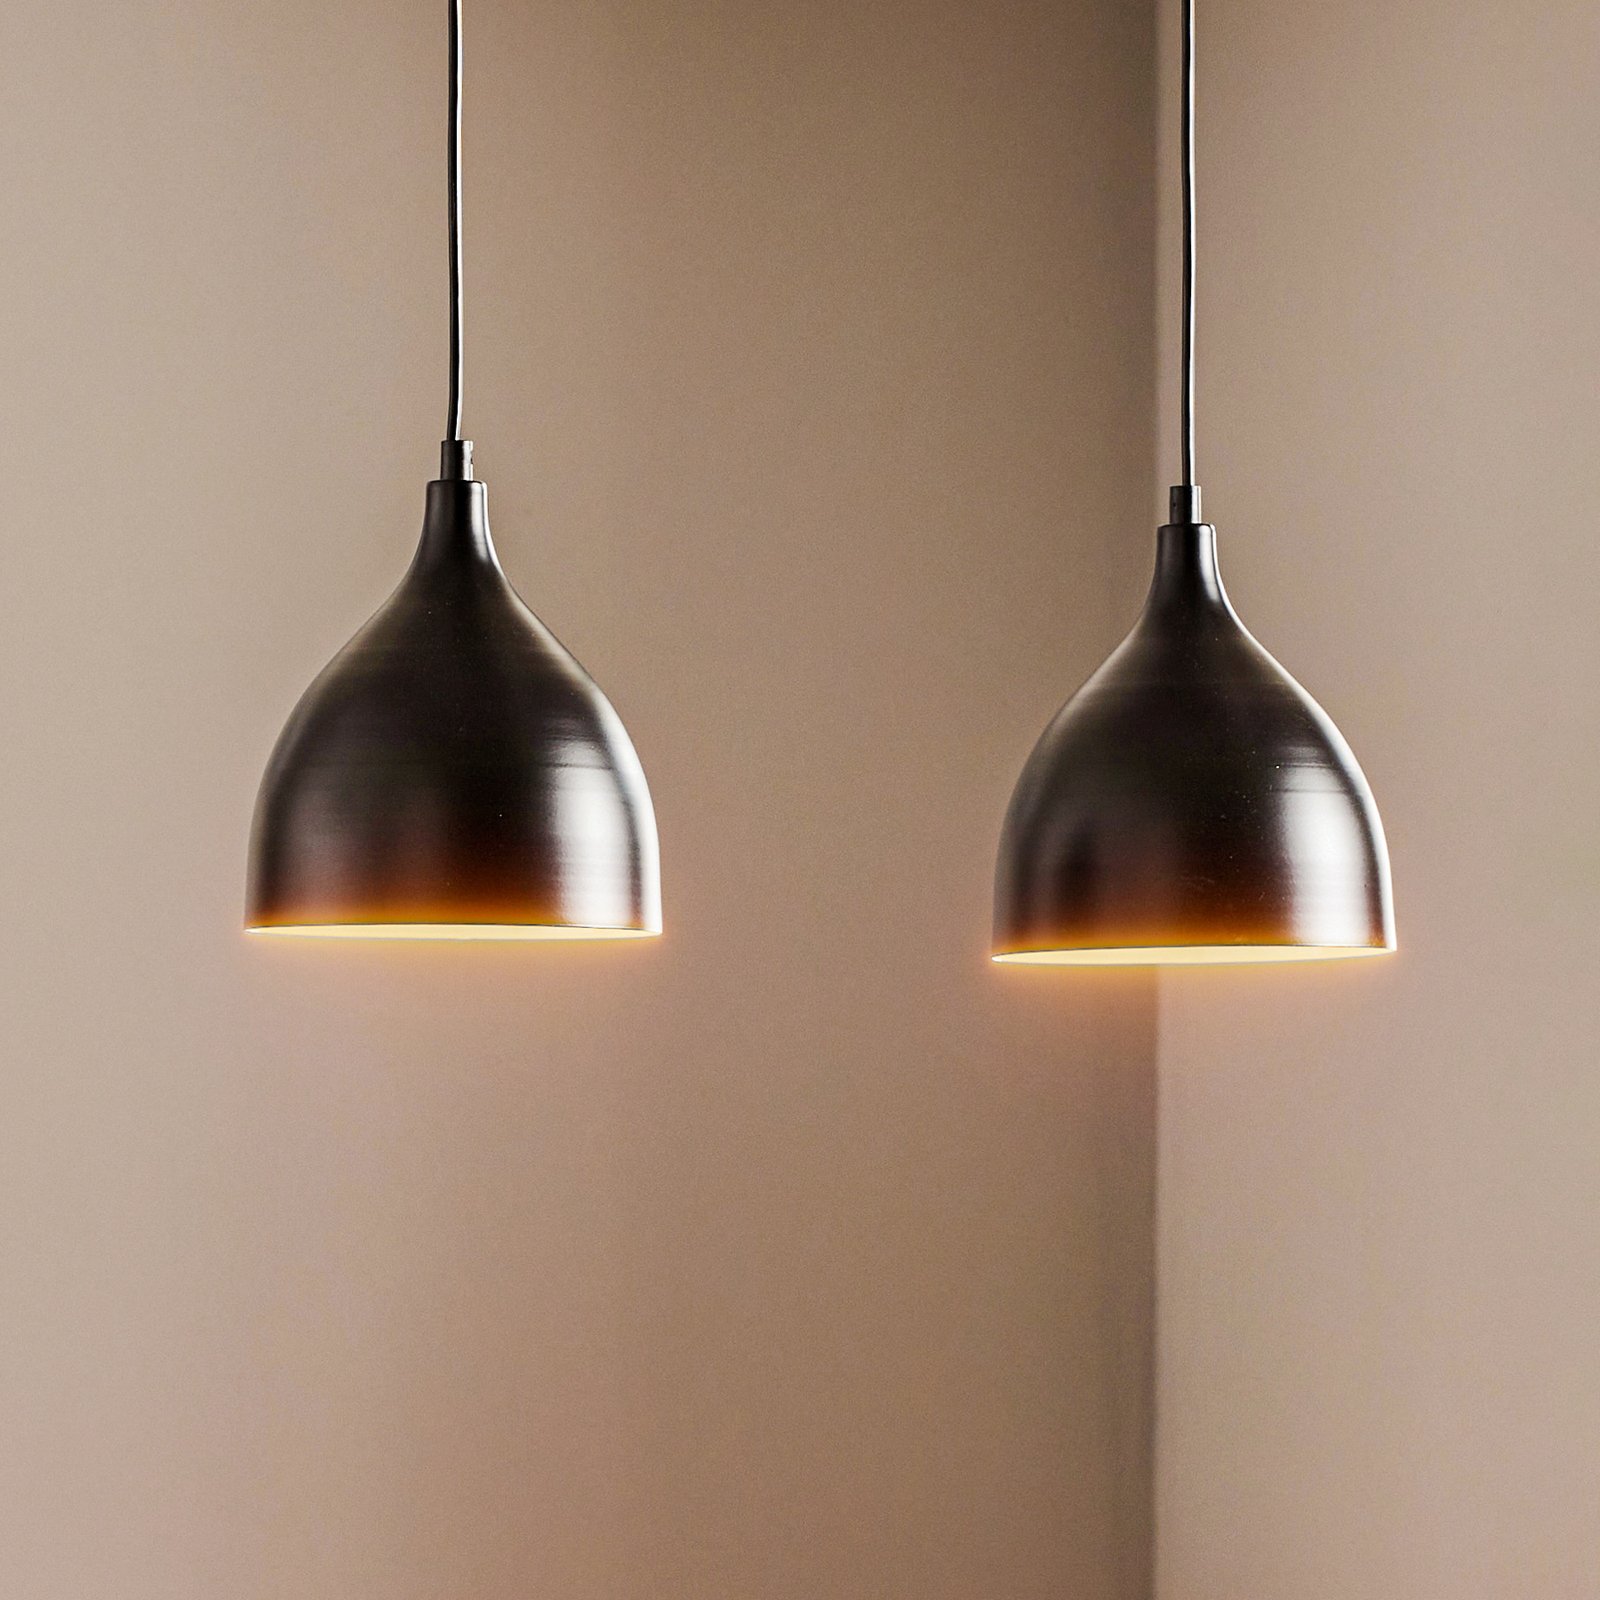 Nanu pendant light made of metal black two-bulb